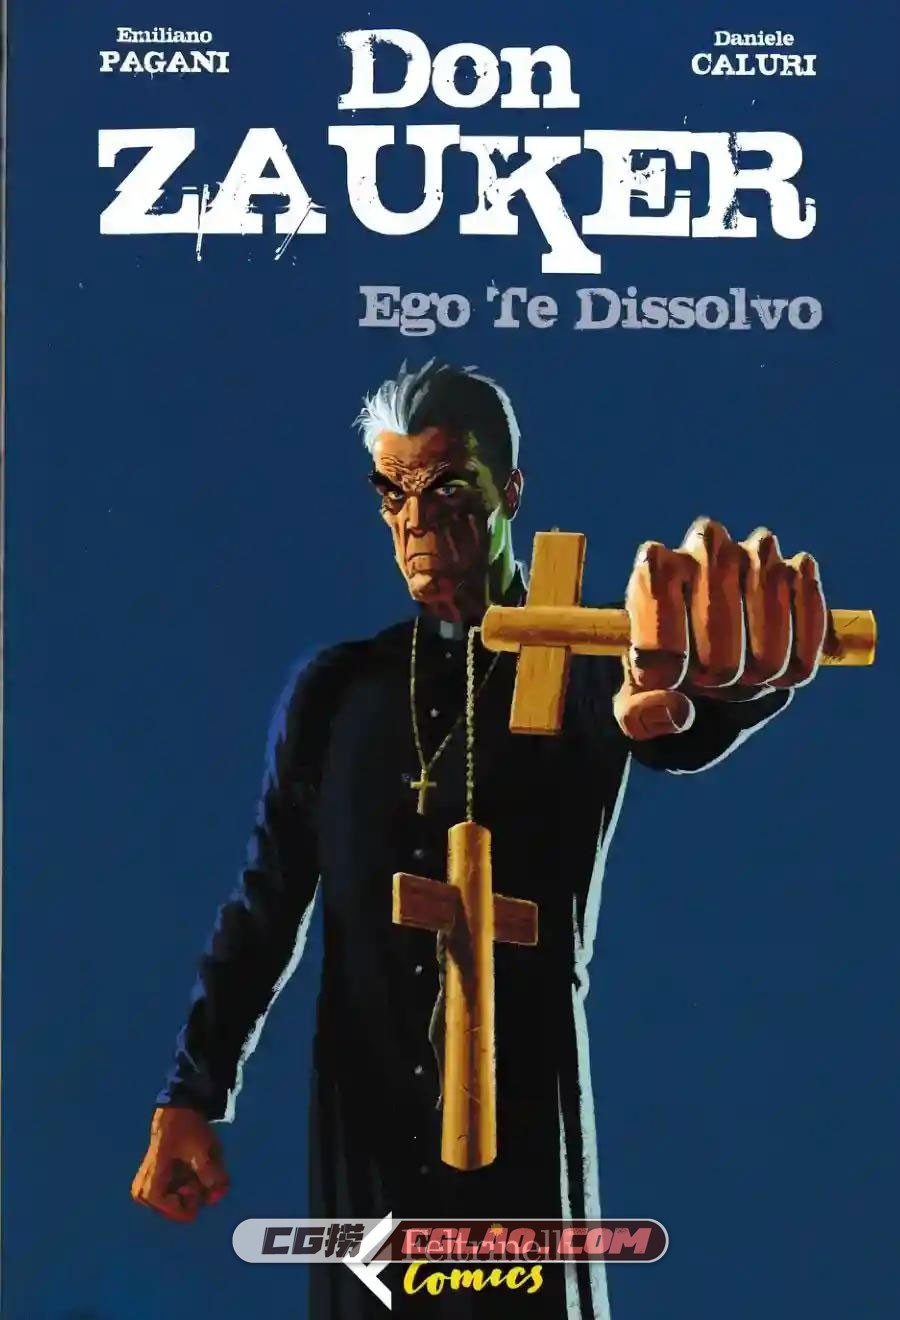 Don Zauker Ego Te Dissolvo 漫画 百度网盘下载,00000.jpg